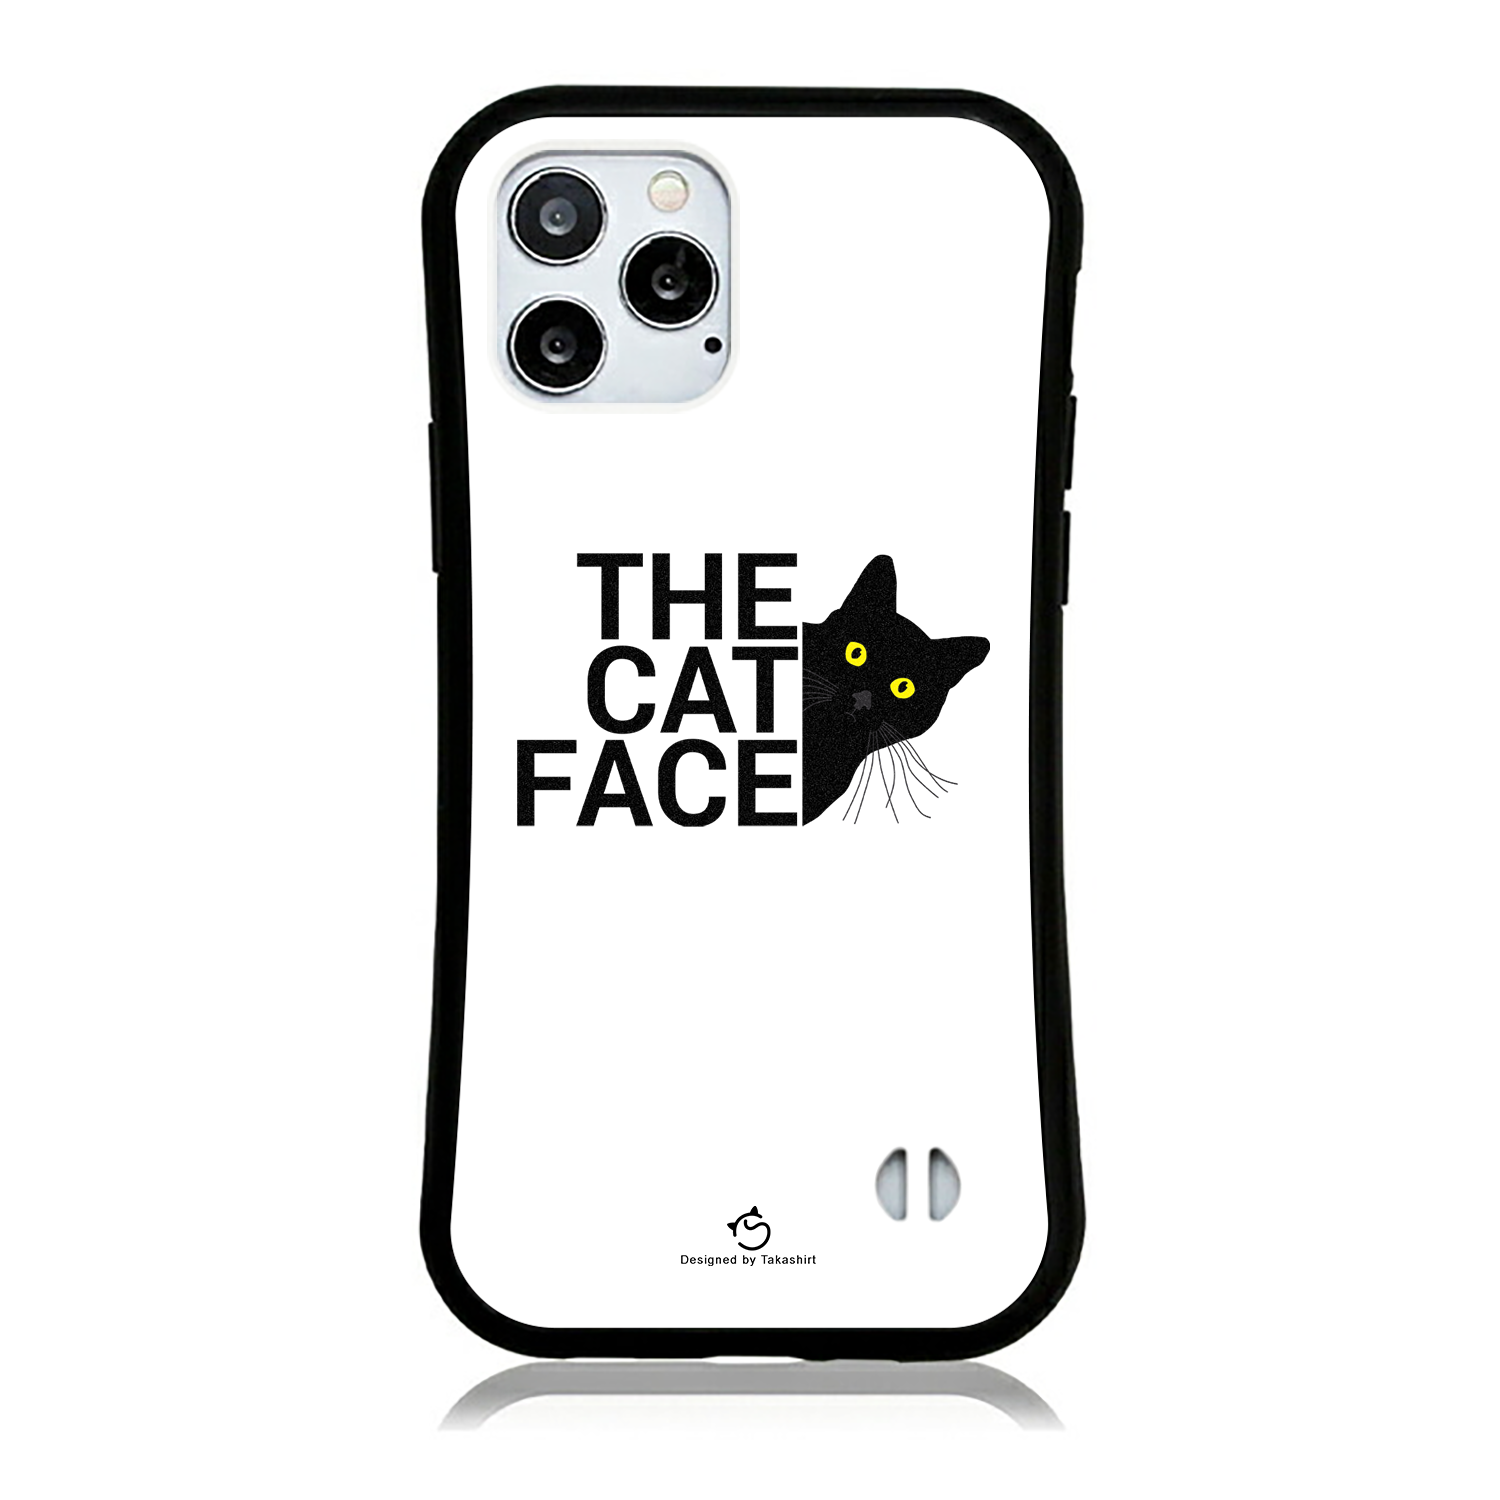 【kate spade】iPhone 7、８対応カフェデザインです。